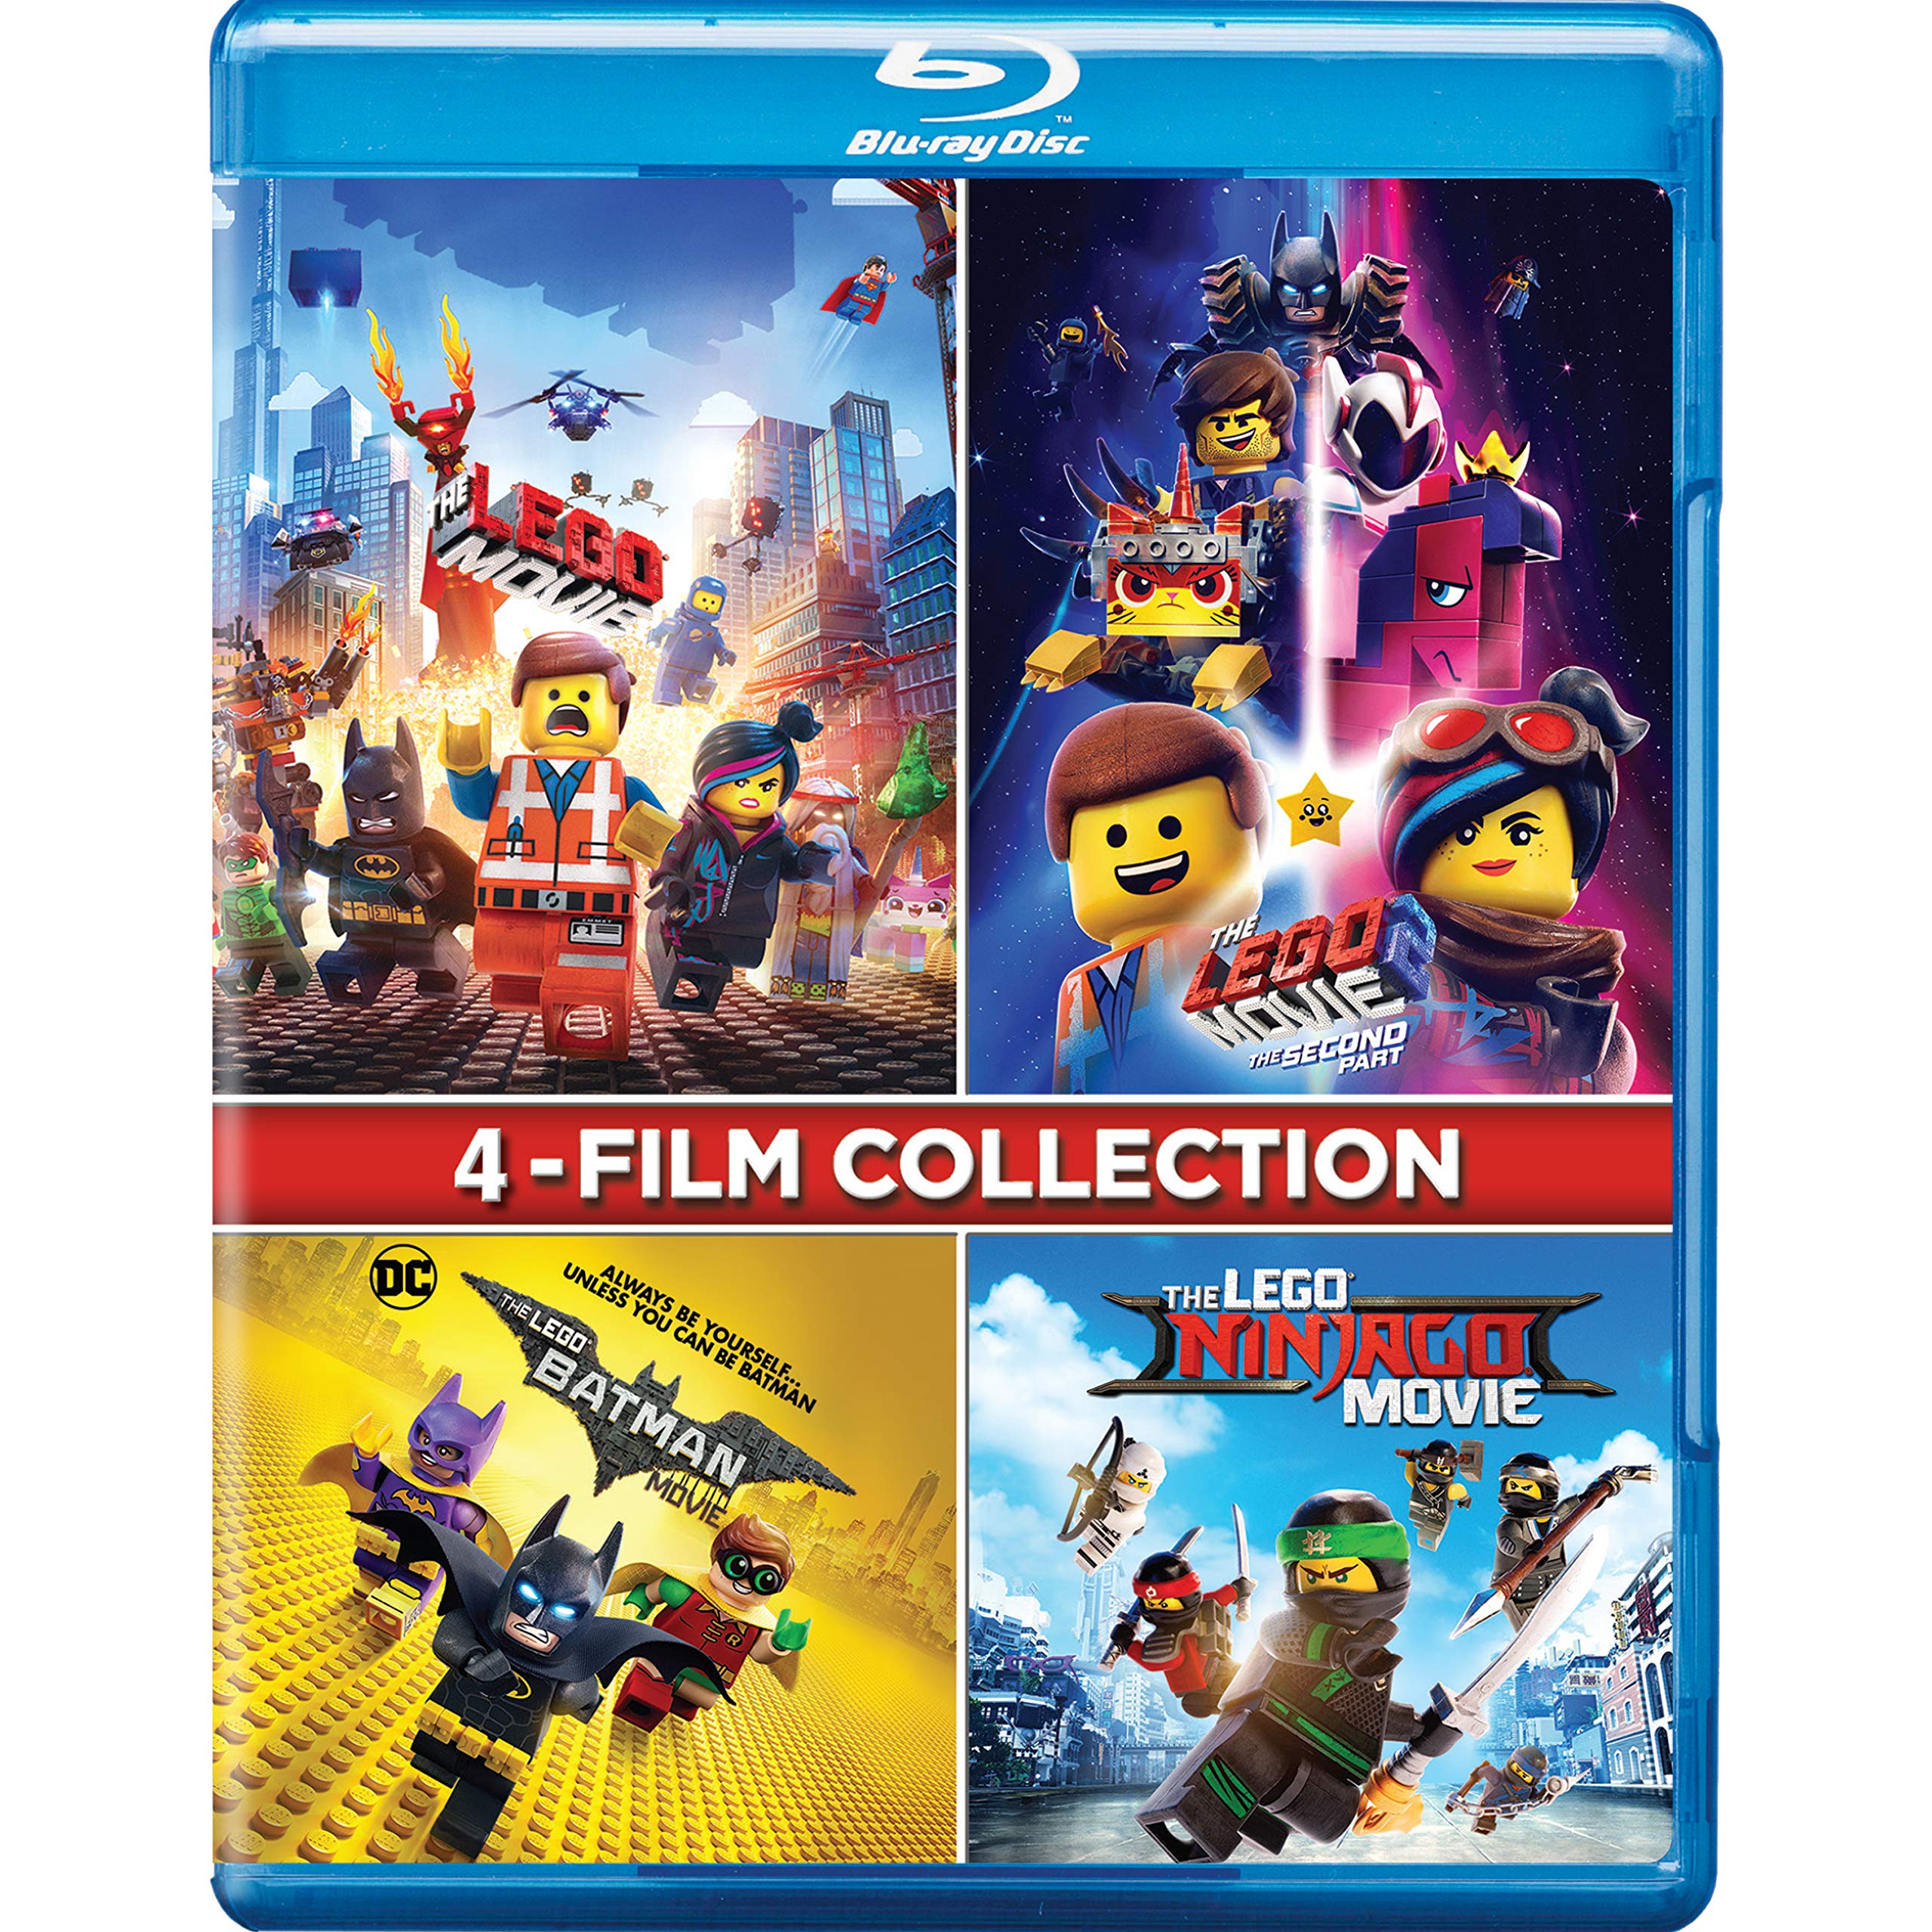 the-lego-4-movies-collection-the-lego-movie-the-lego-movie-2-the-second-part-the-lego-batman-movie-the-lego-ninjago-movie-4-disc-box-set